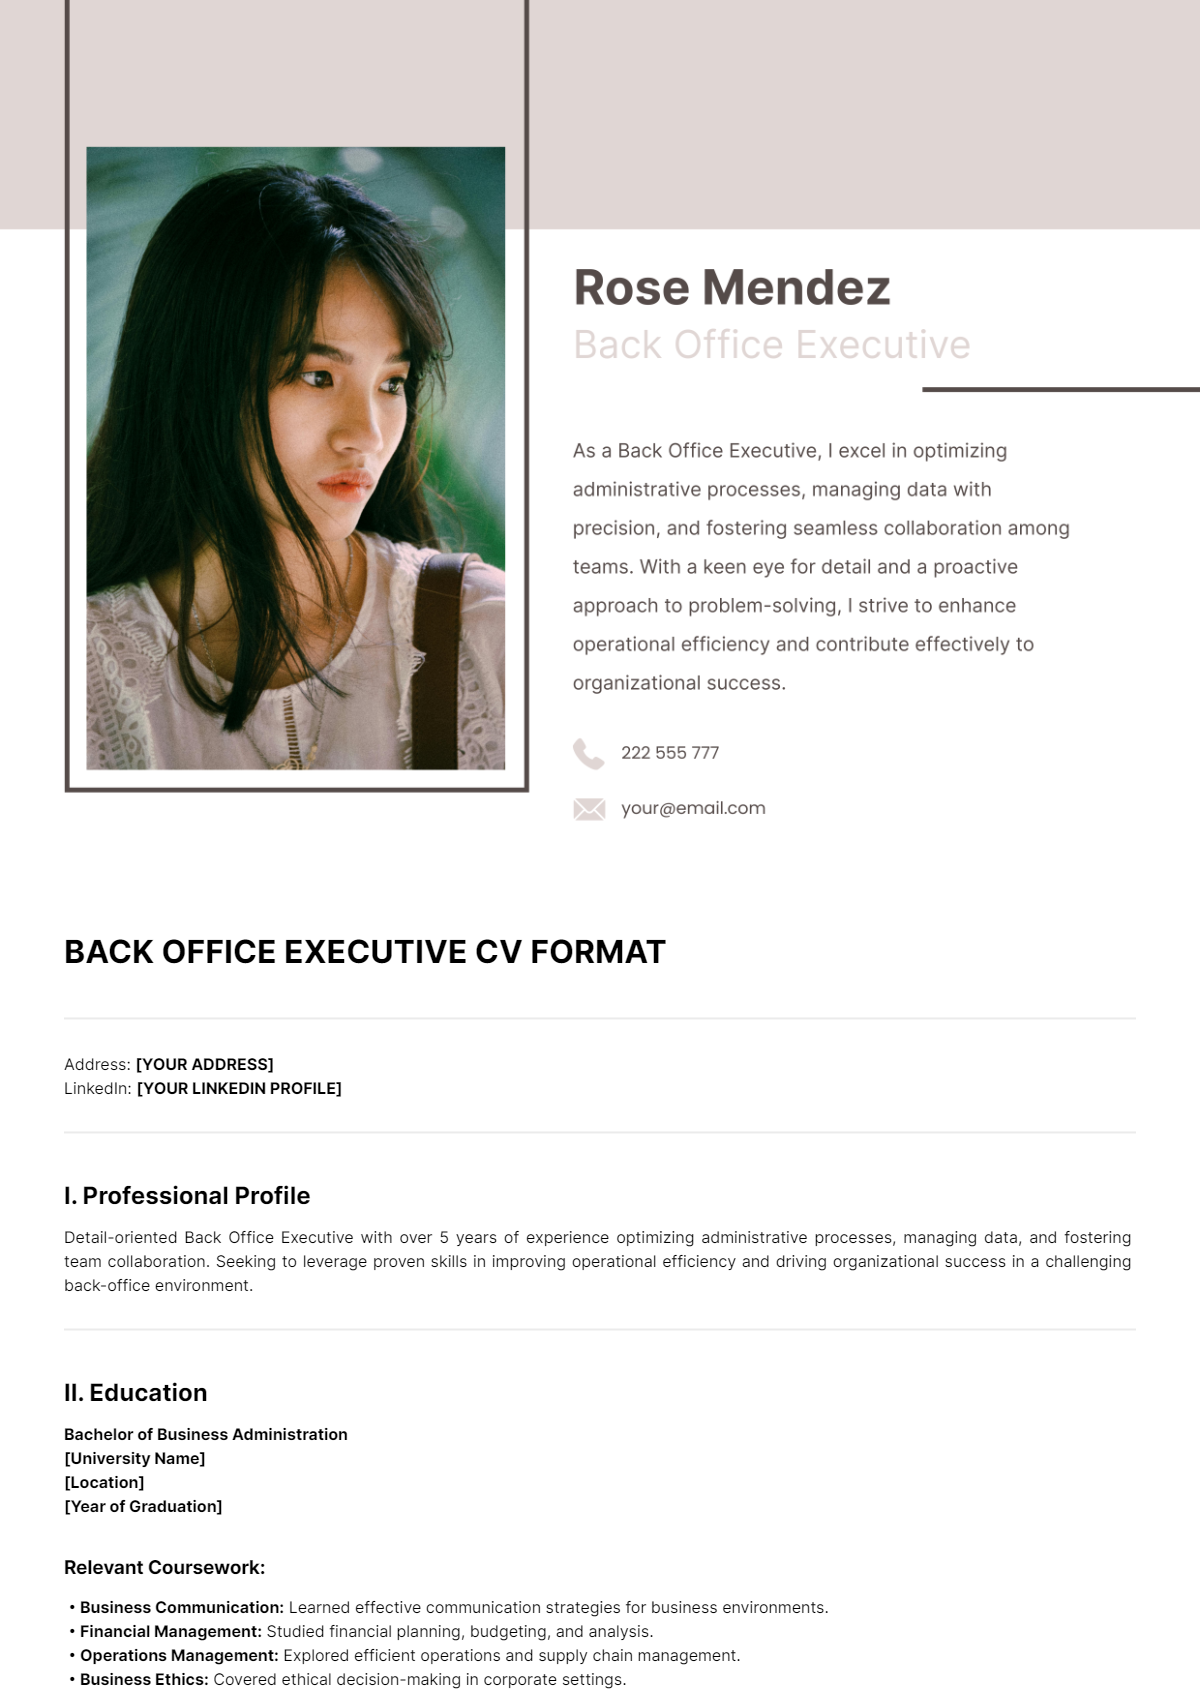 Back Office Executive CV Format Template